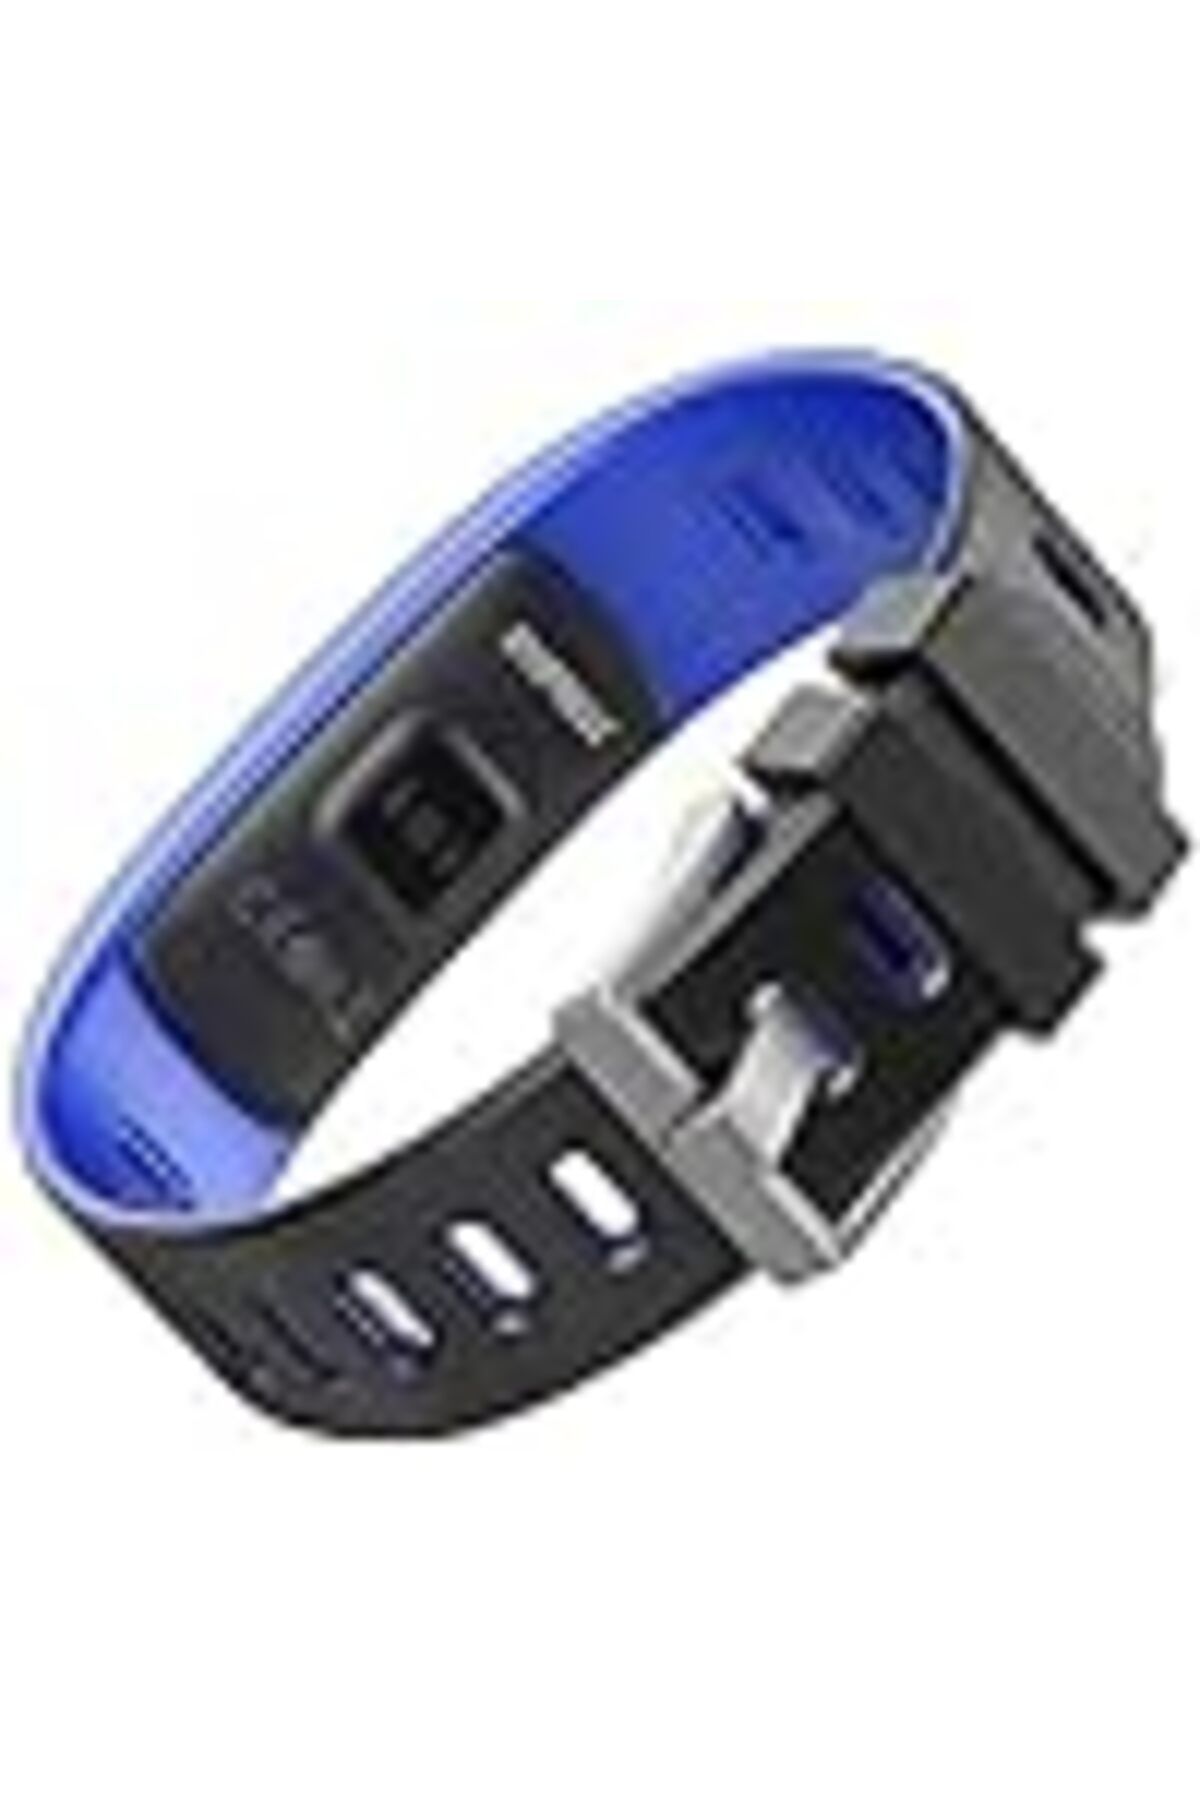 Genel Markalar Everest Ever Fit W45 Android/ıos Smart Watch Full Dokunmatik Renkli Ekran Mavi/siyah Akıllı Bileklik